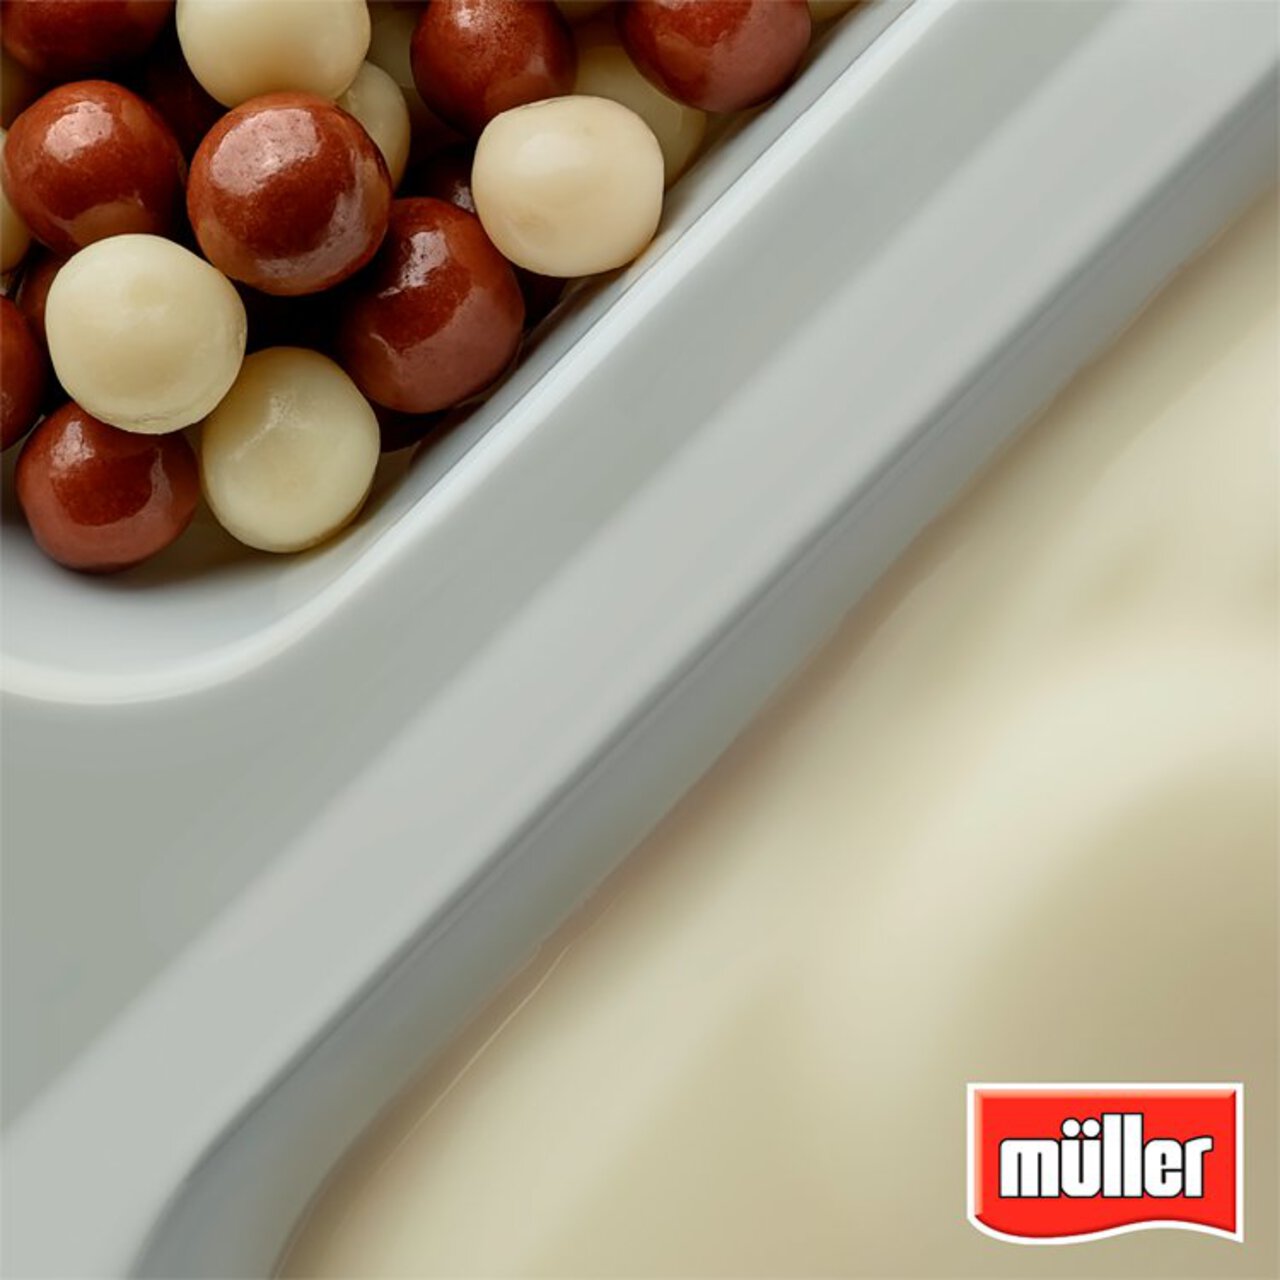 Muller Corner Chocolate Digestive and Strawberry Shortcake Yogurts 6 x 124g